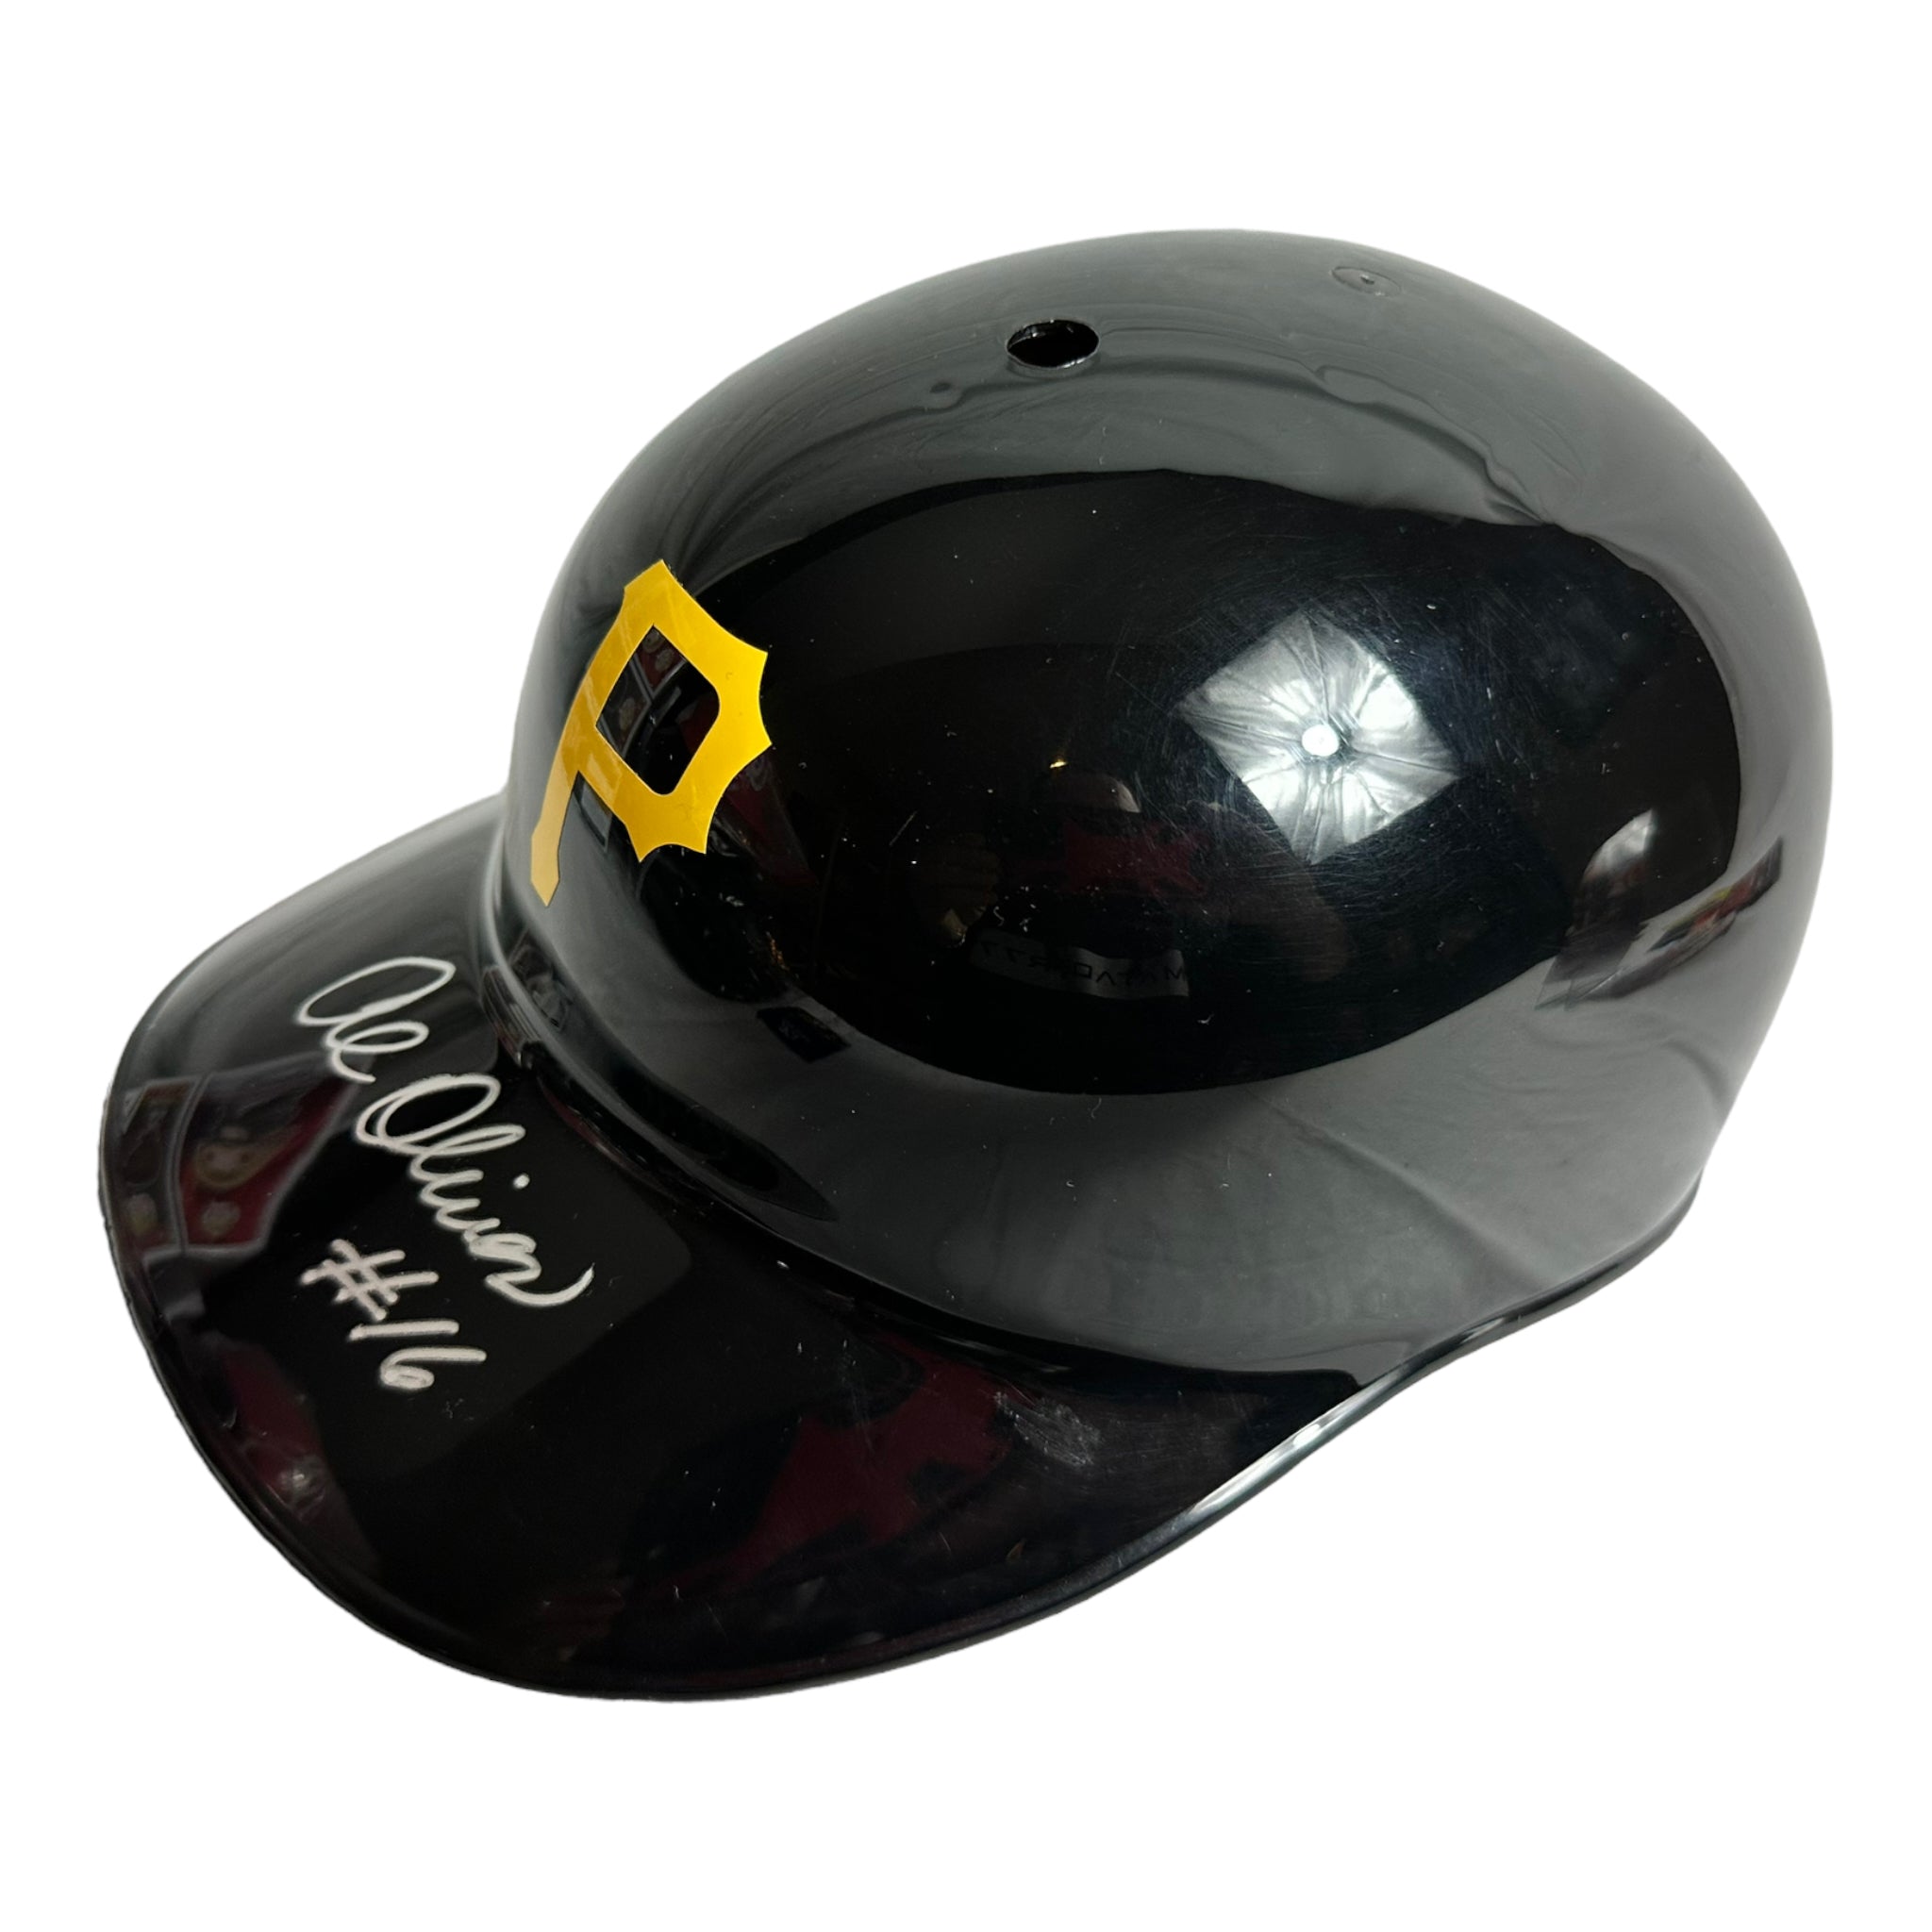 Al Oliver Hand Signed FS MLB Souvenir Pittsburg pirates Batting Helmet W/COA JSA